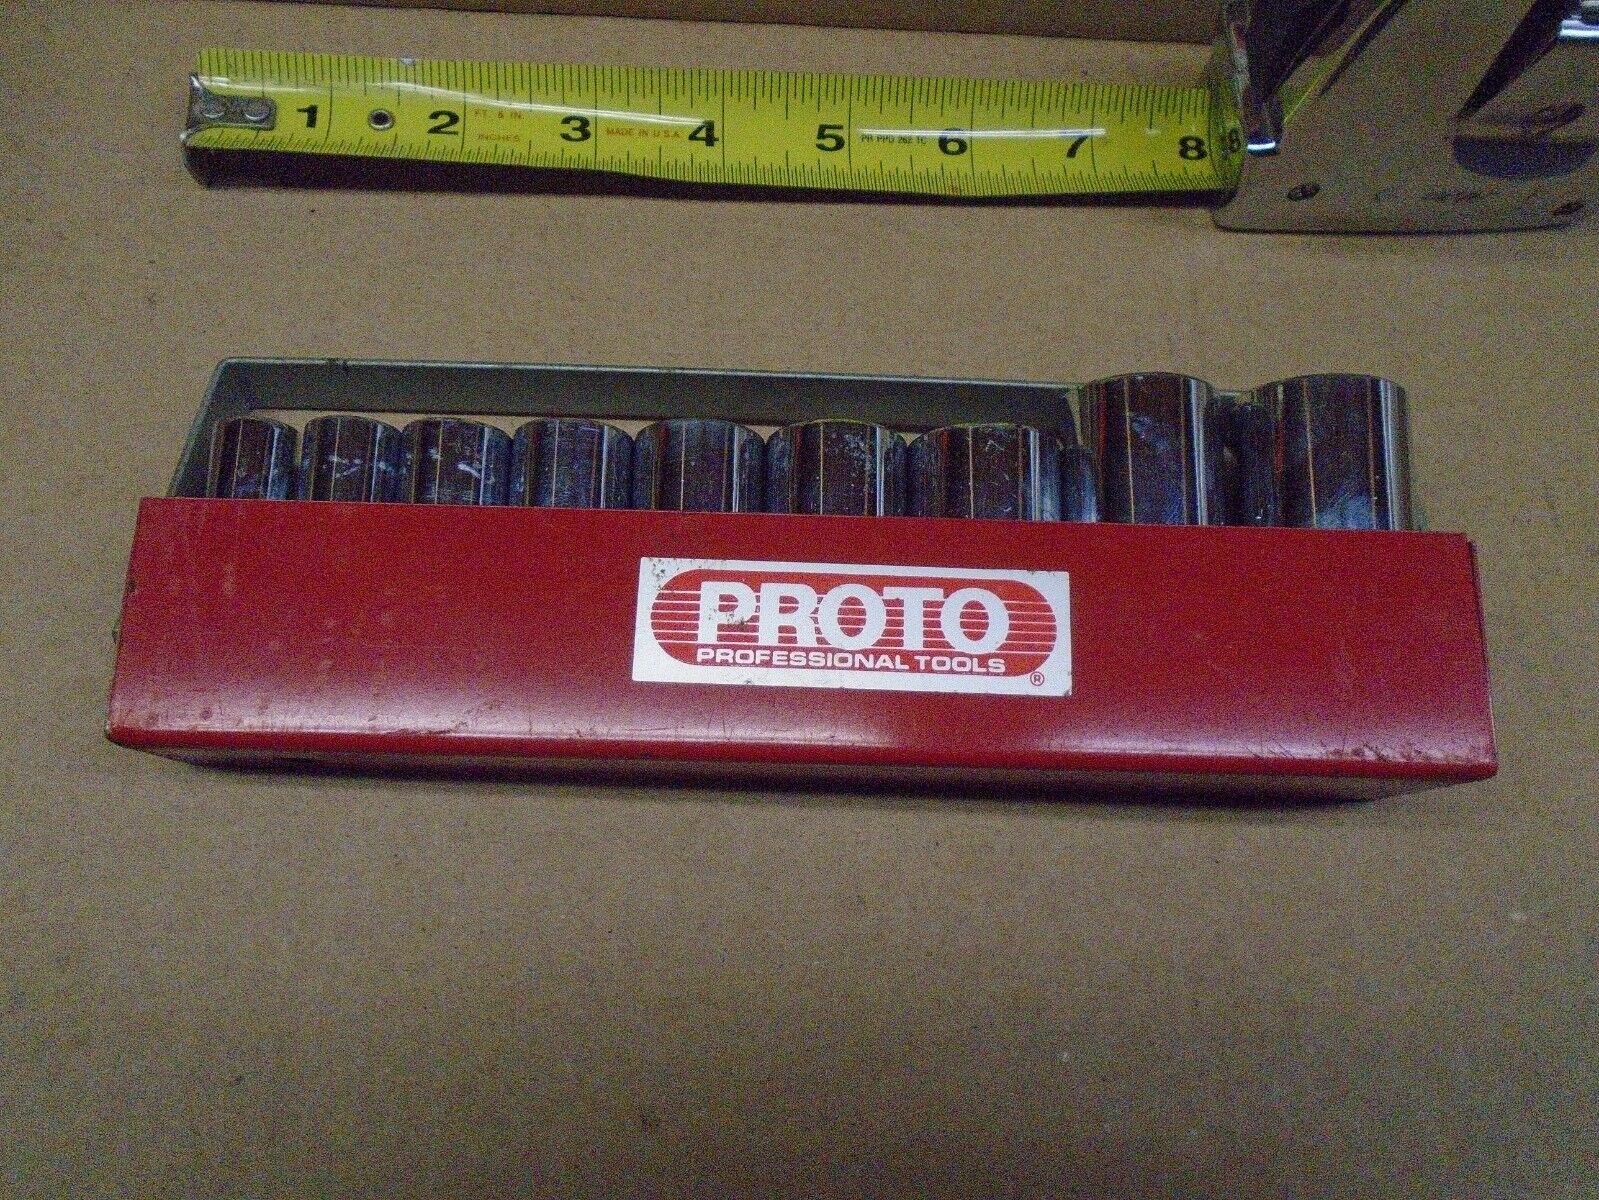 Proto Professional USA 3/8" Drive SAE 12-Point Deep Socket Set with Metal Tray